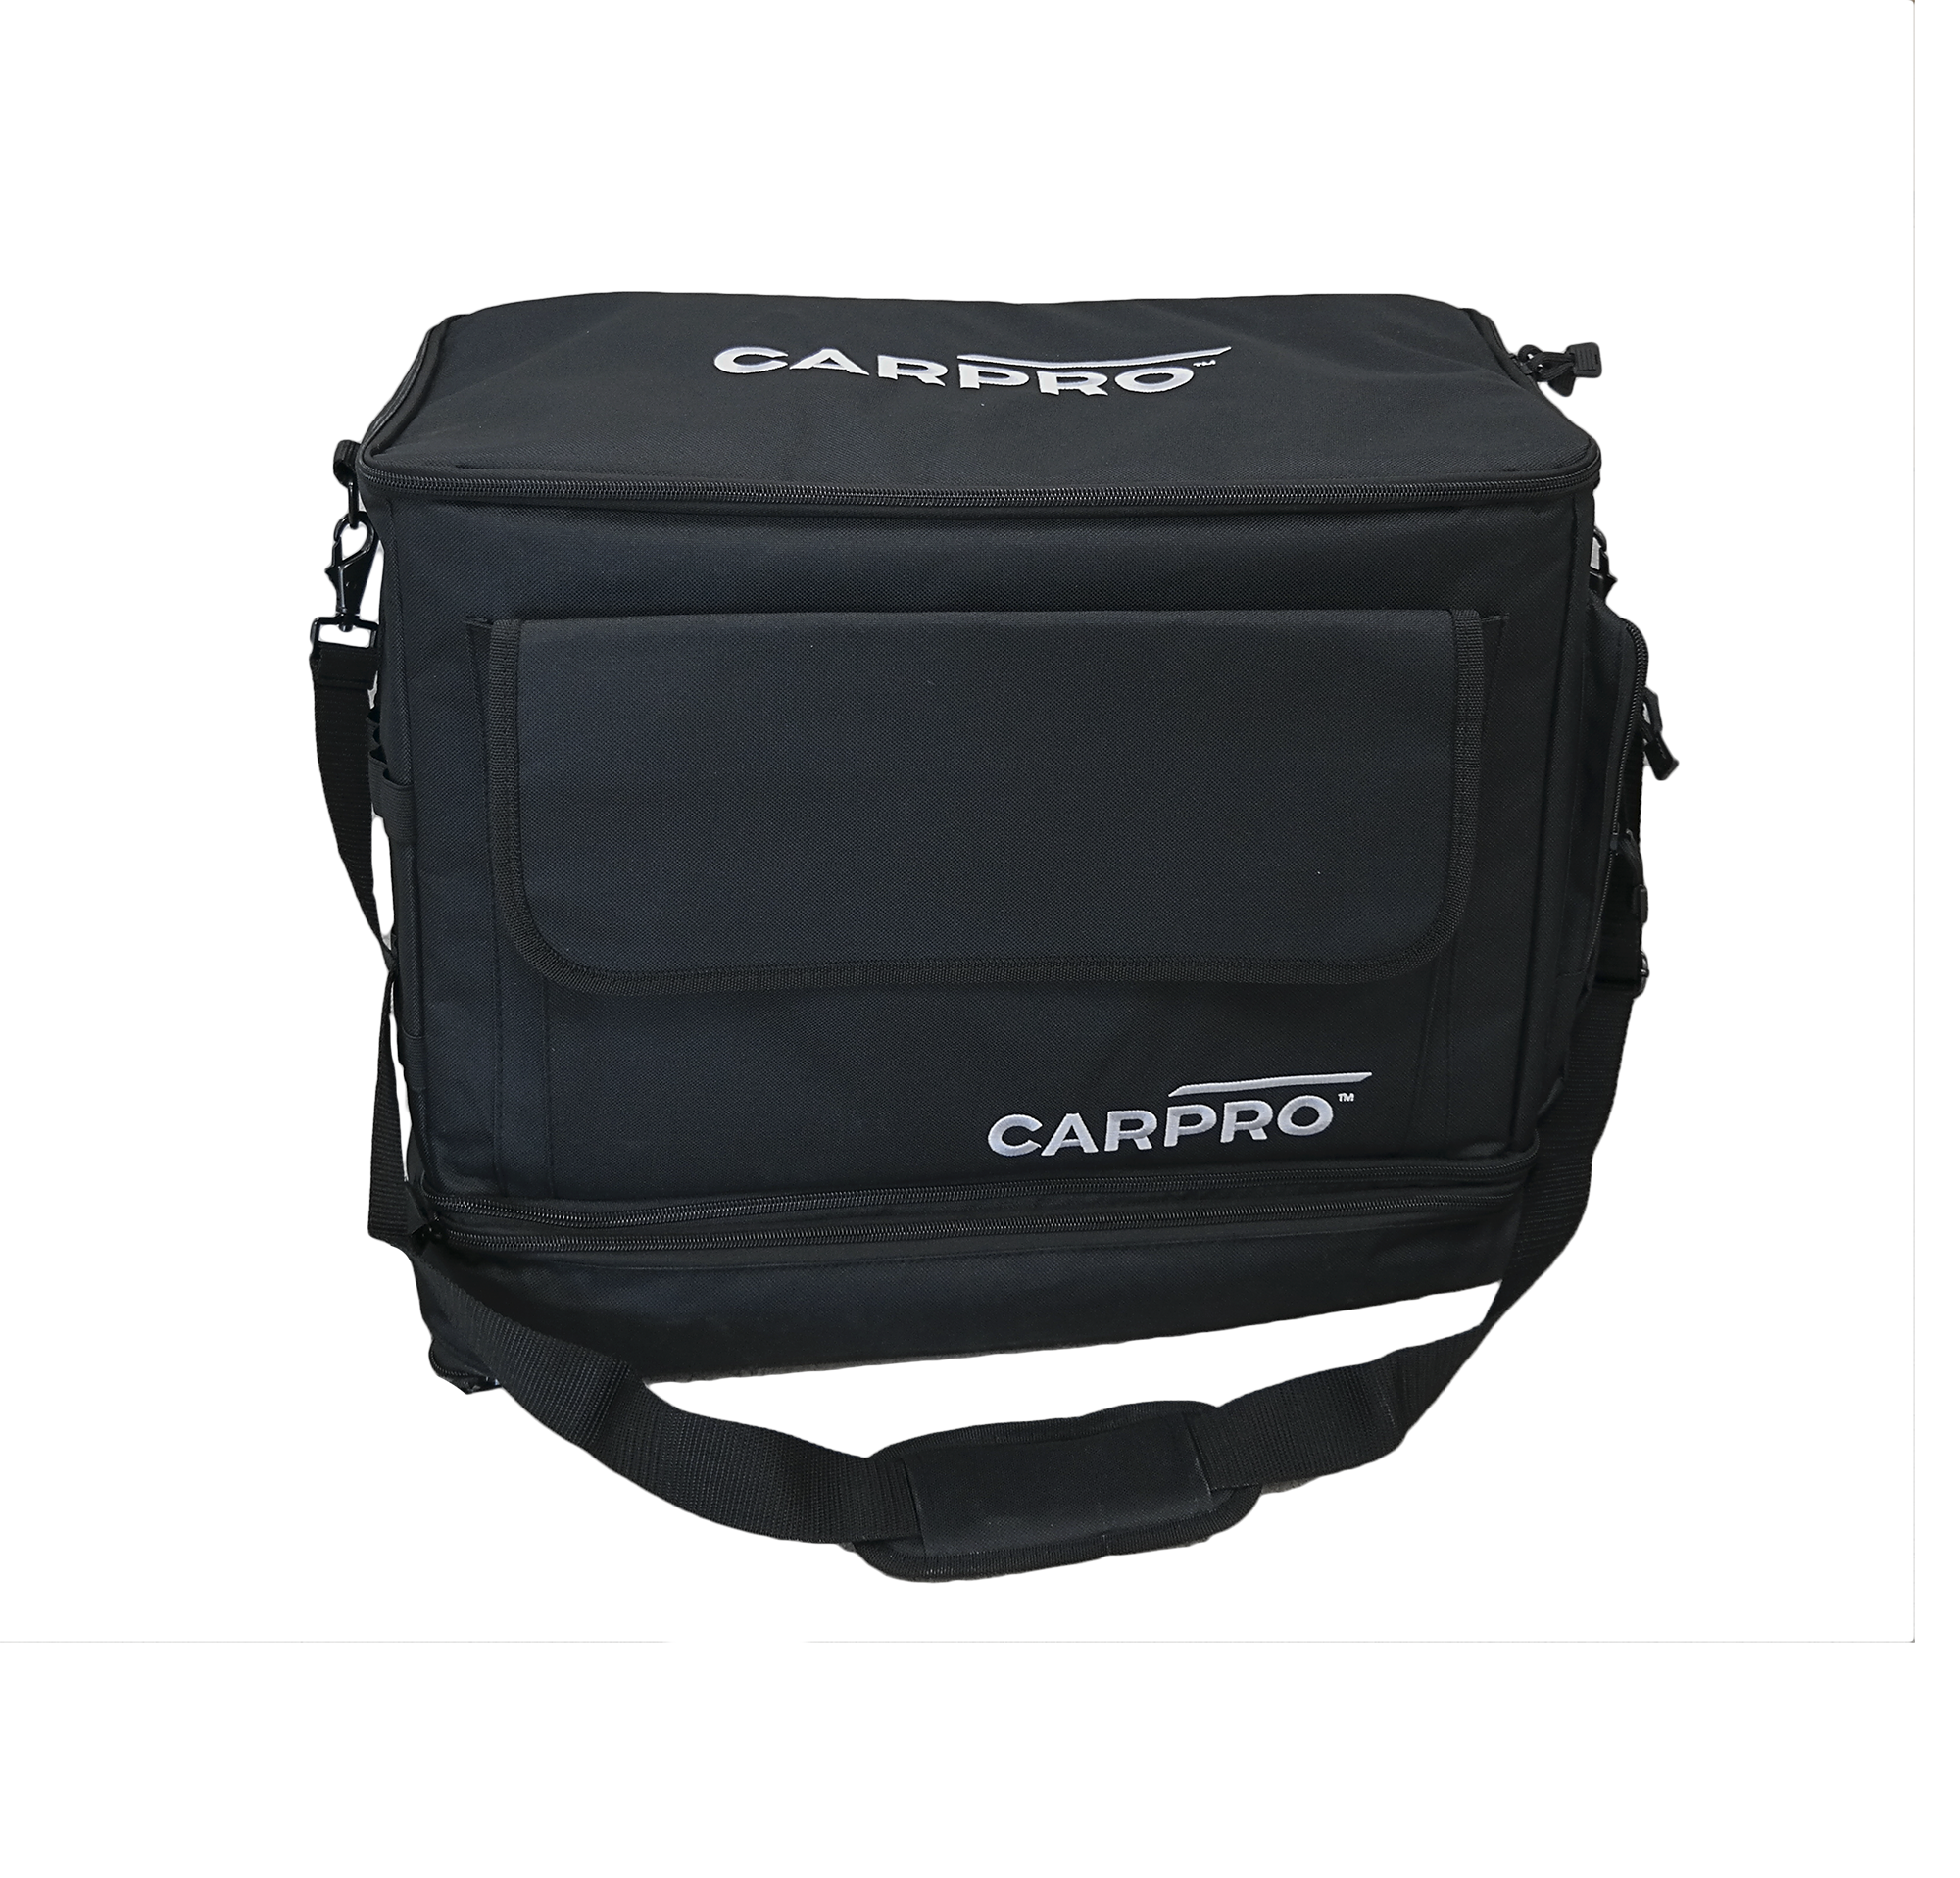 CARPRO - Detailing Bag XL (Sac de transport XL)